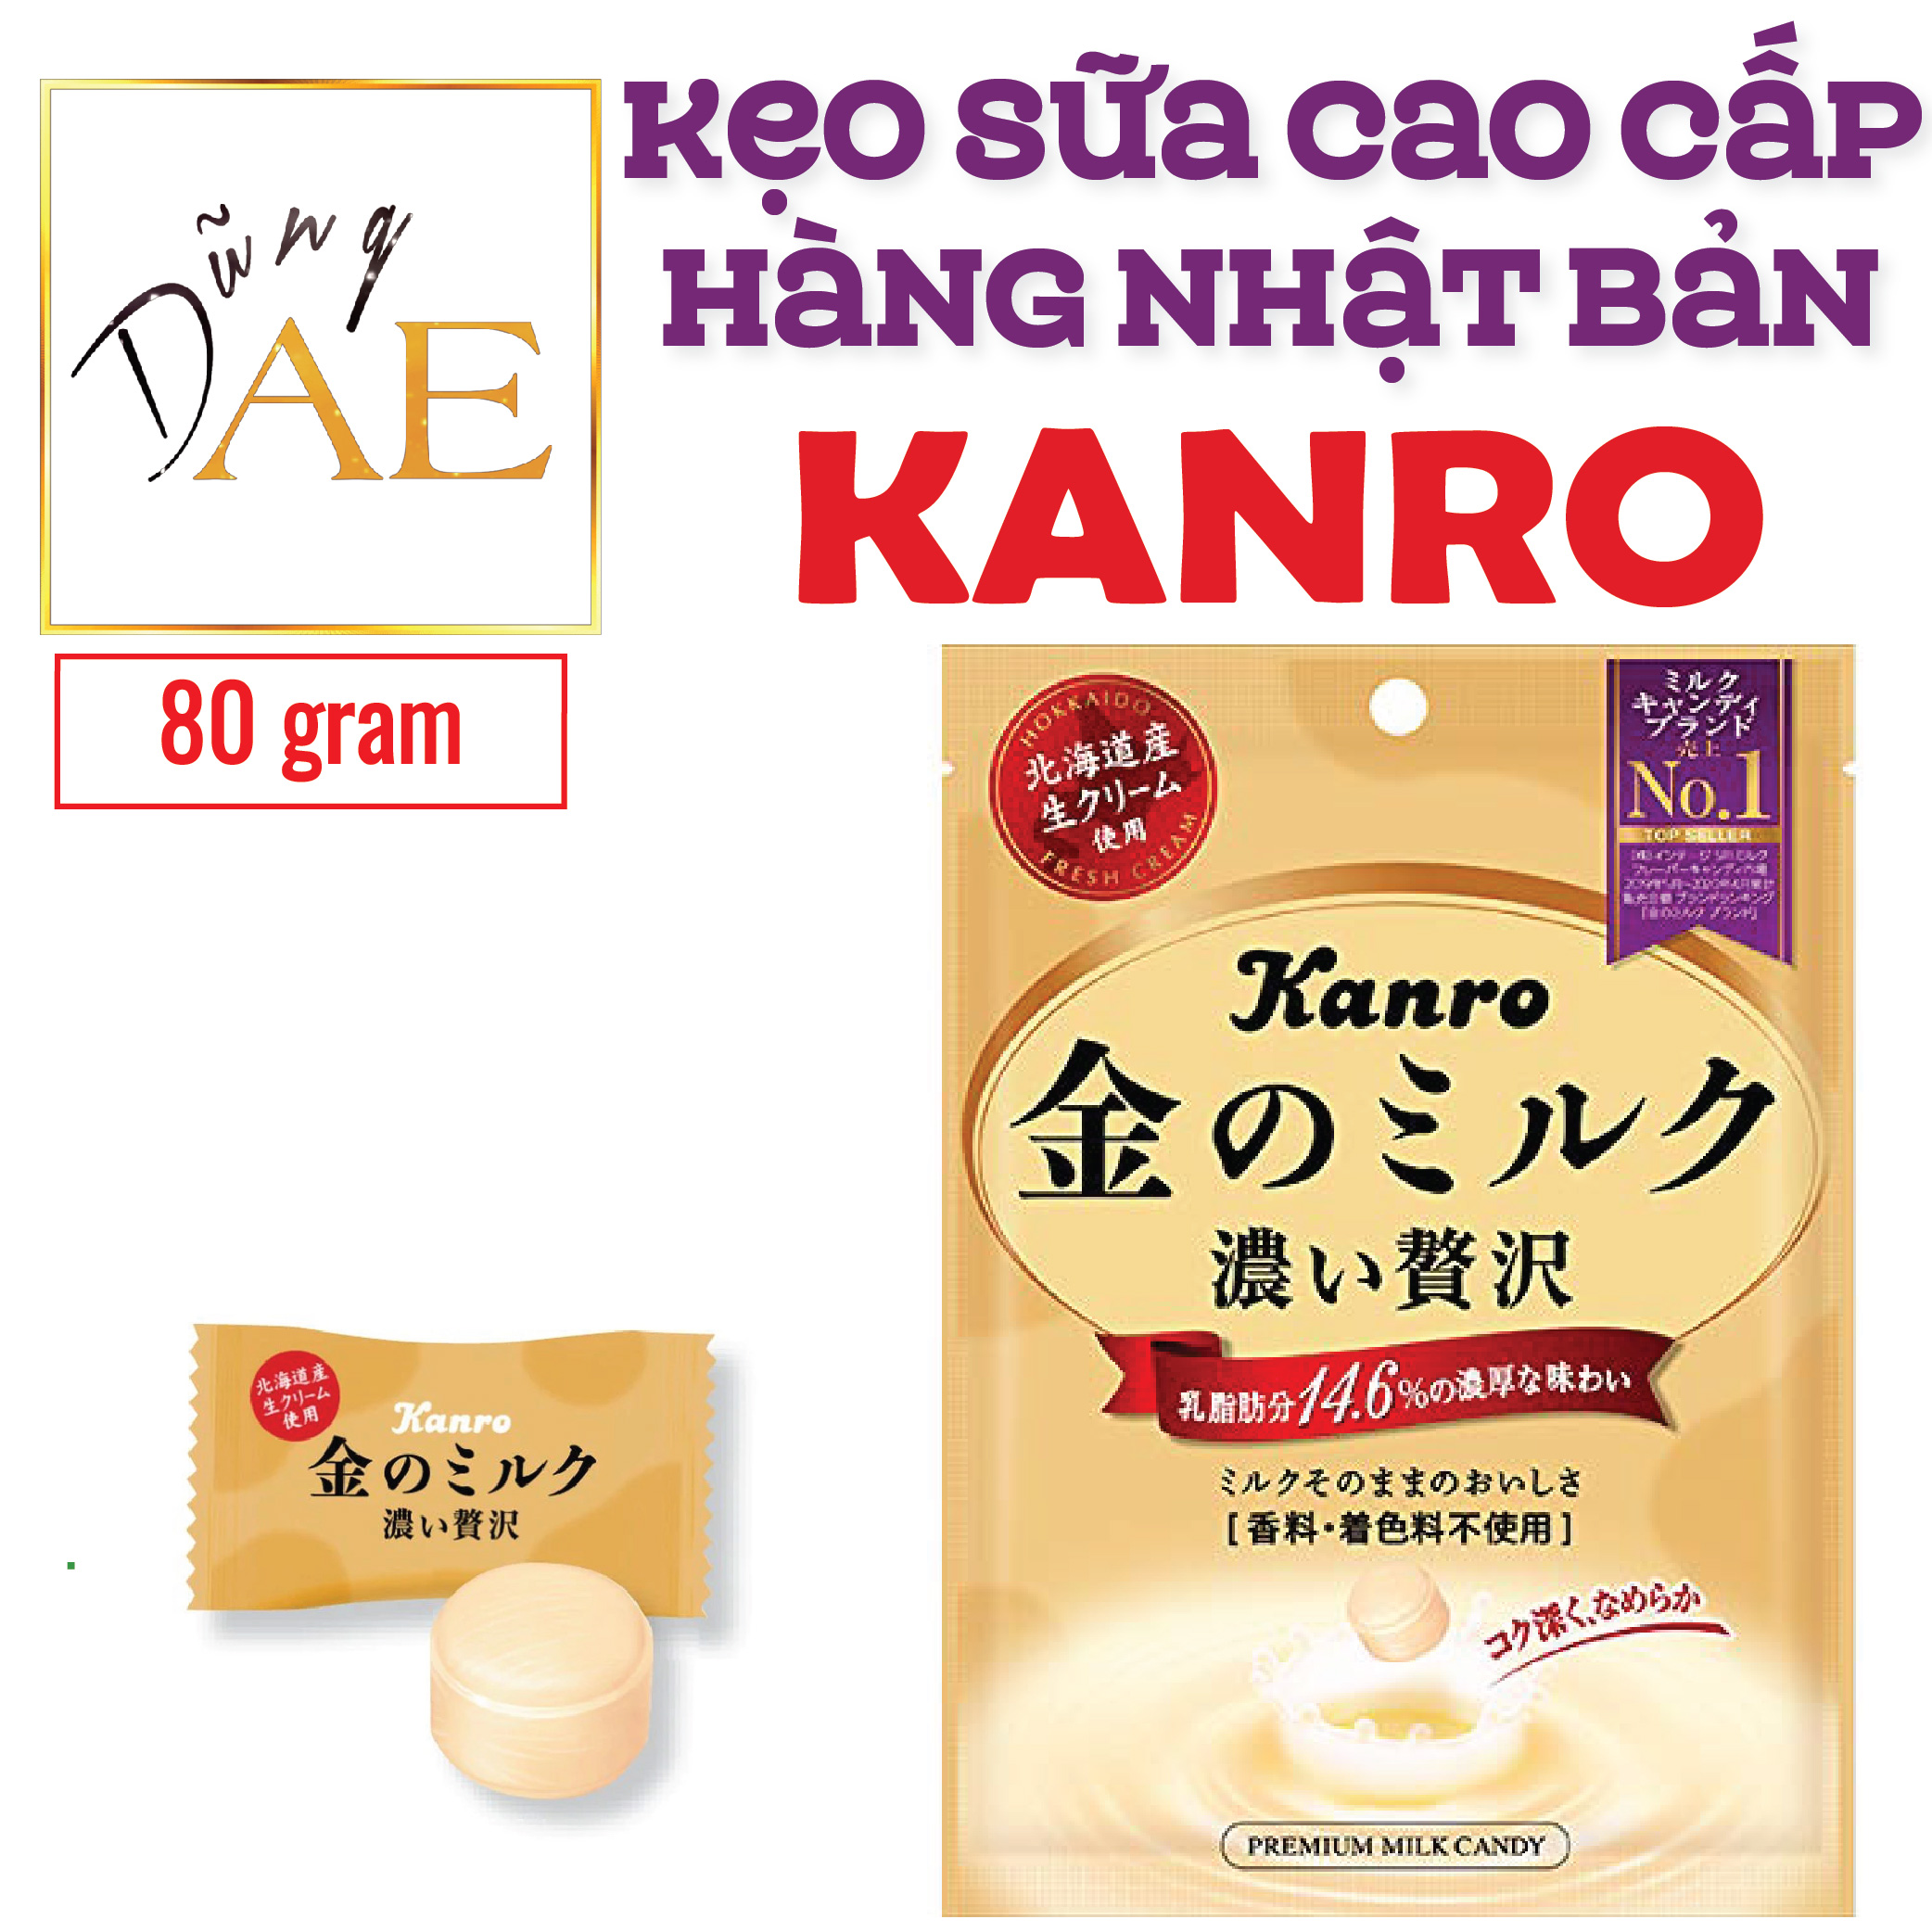 Kẹo Sữa Kanro Cao Cấp Nhật Bản 80g